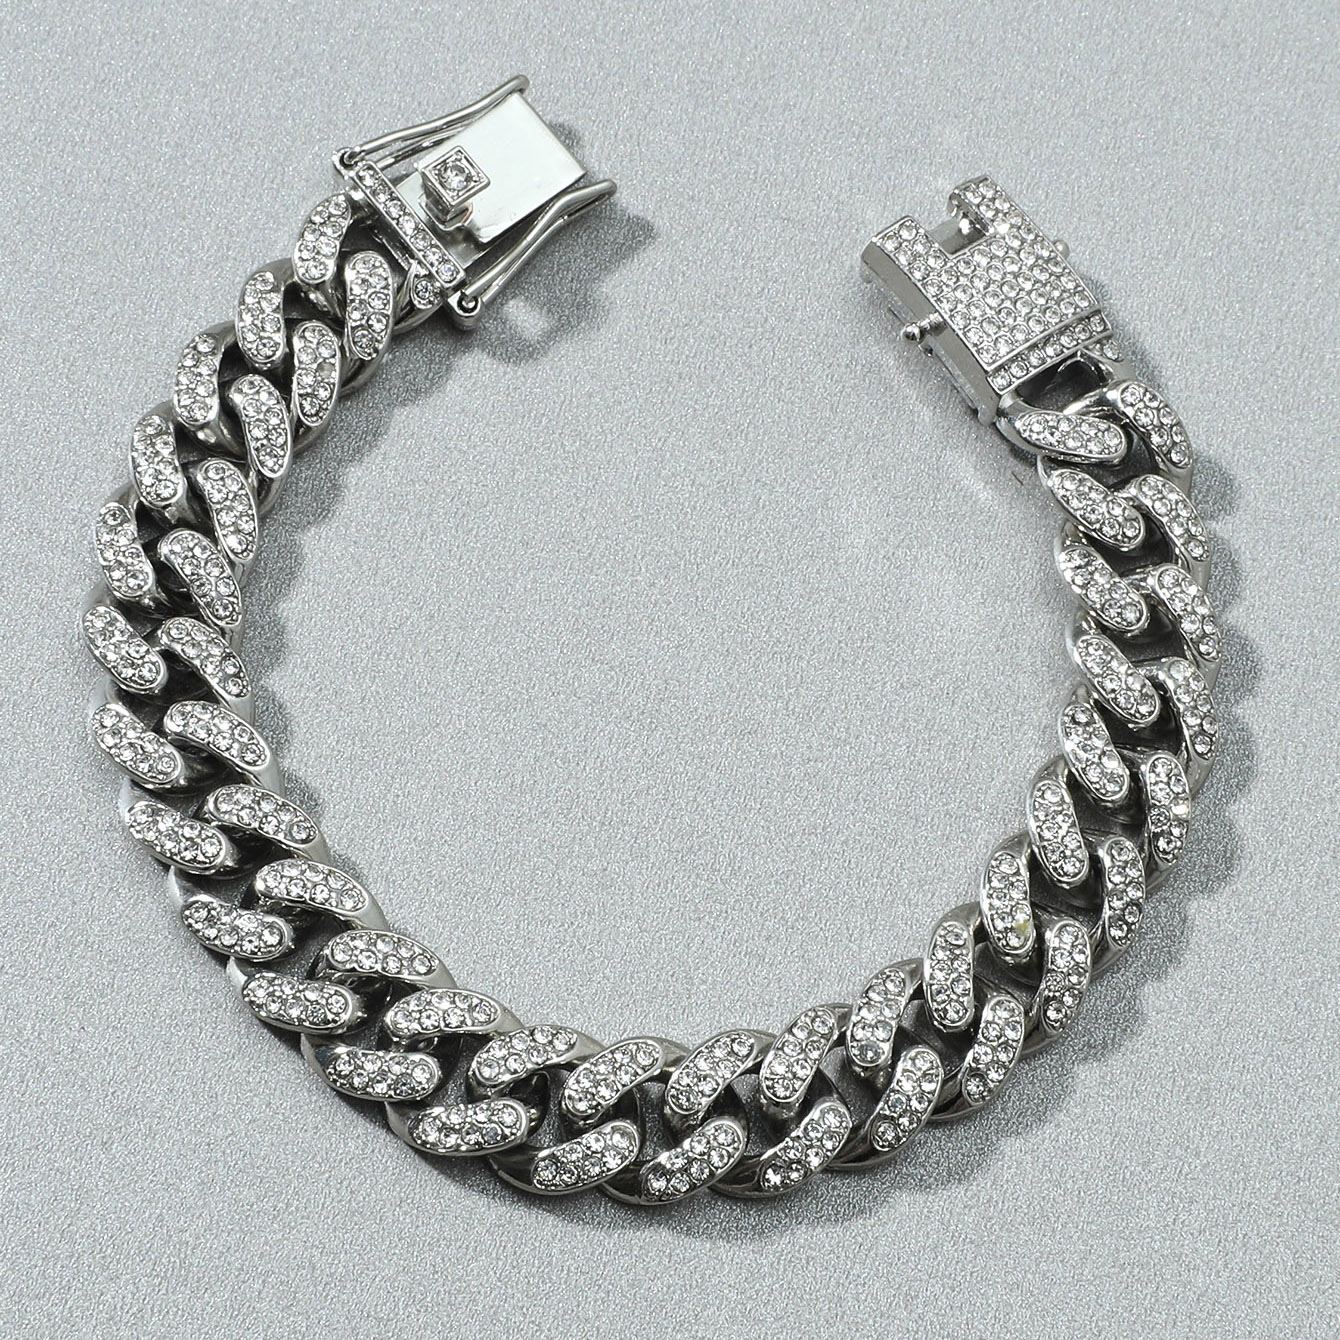 d9bac6d3 f084 49e0 bdd9 2917b5b26eae - Luxury Rhinestones Bracelet Jewelry Accessories Gift New Hip Hop Bracelet Fashion Men's Bling Iced Out Cuba Chain